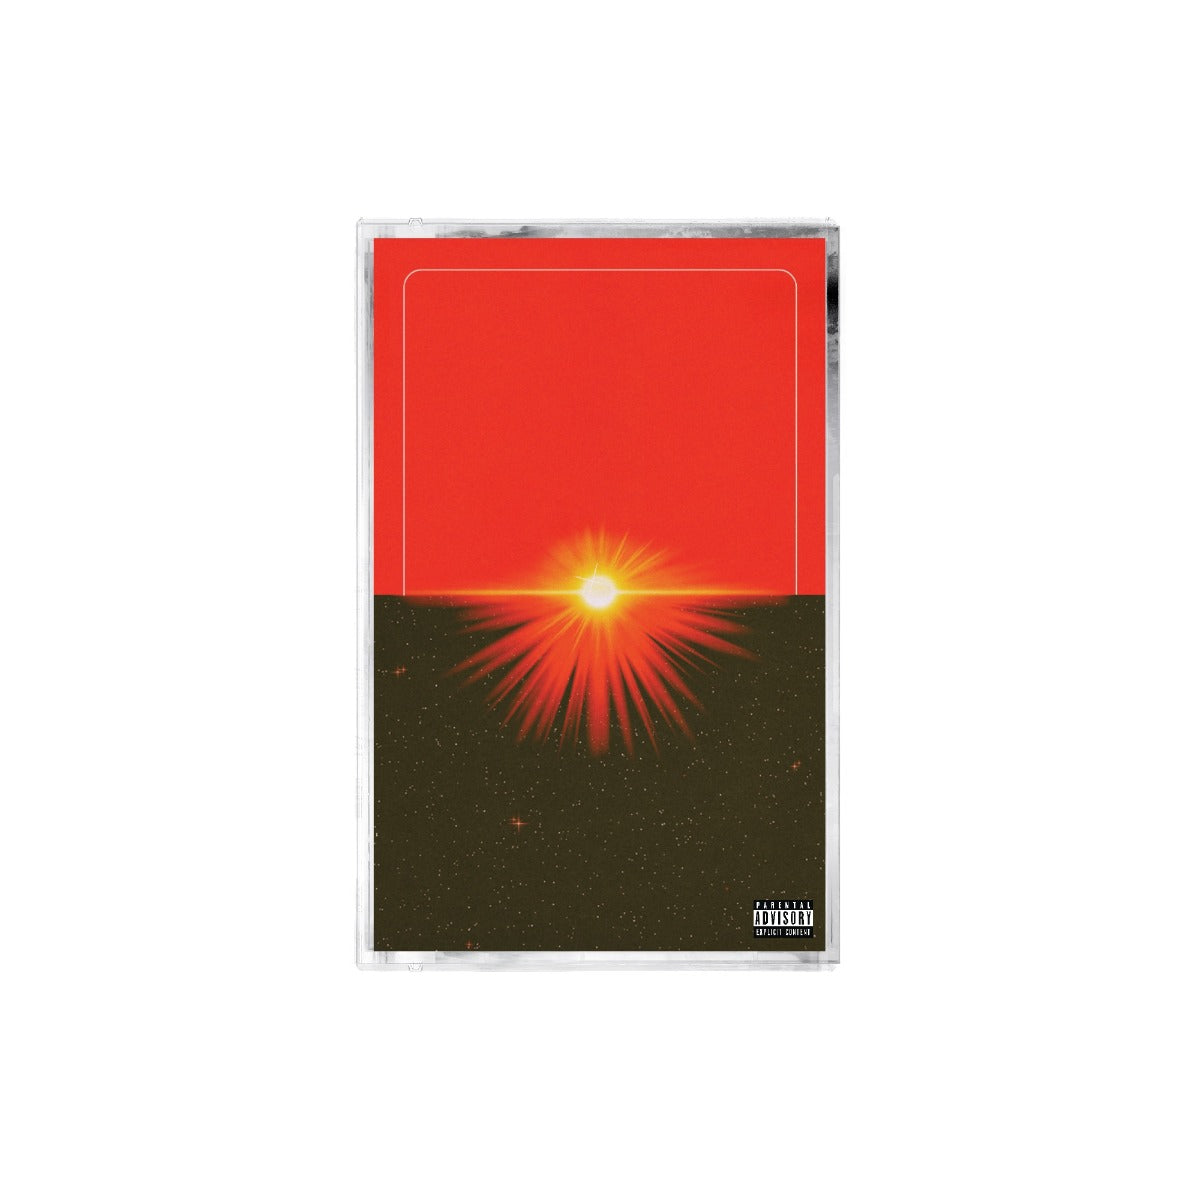 The Weeknd | Dawn FM (Indie Exclusive Cassette W/ Alternate Cover Art) [Explicit Content] | Cassette - 0